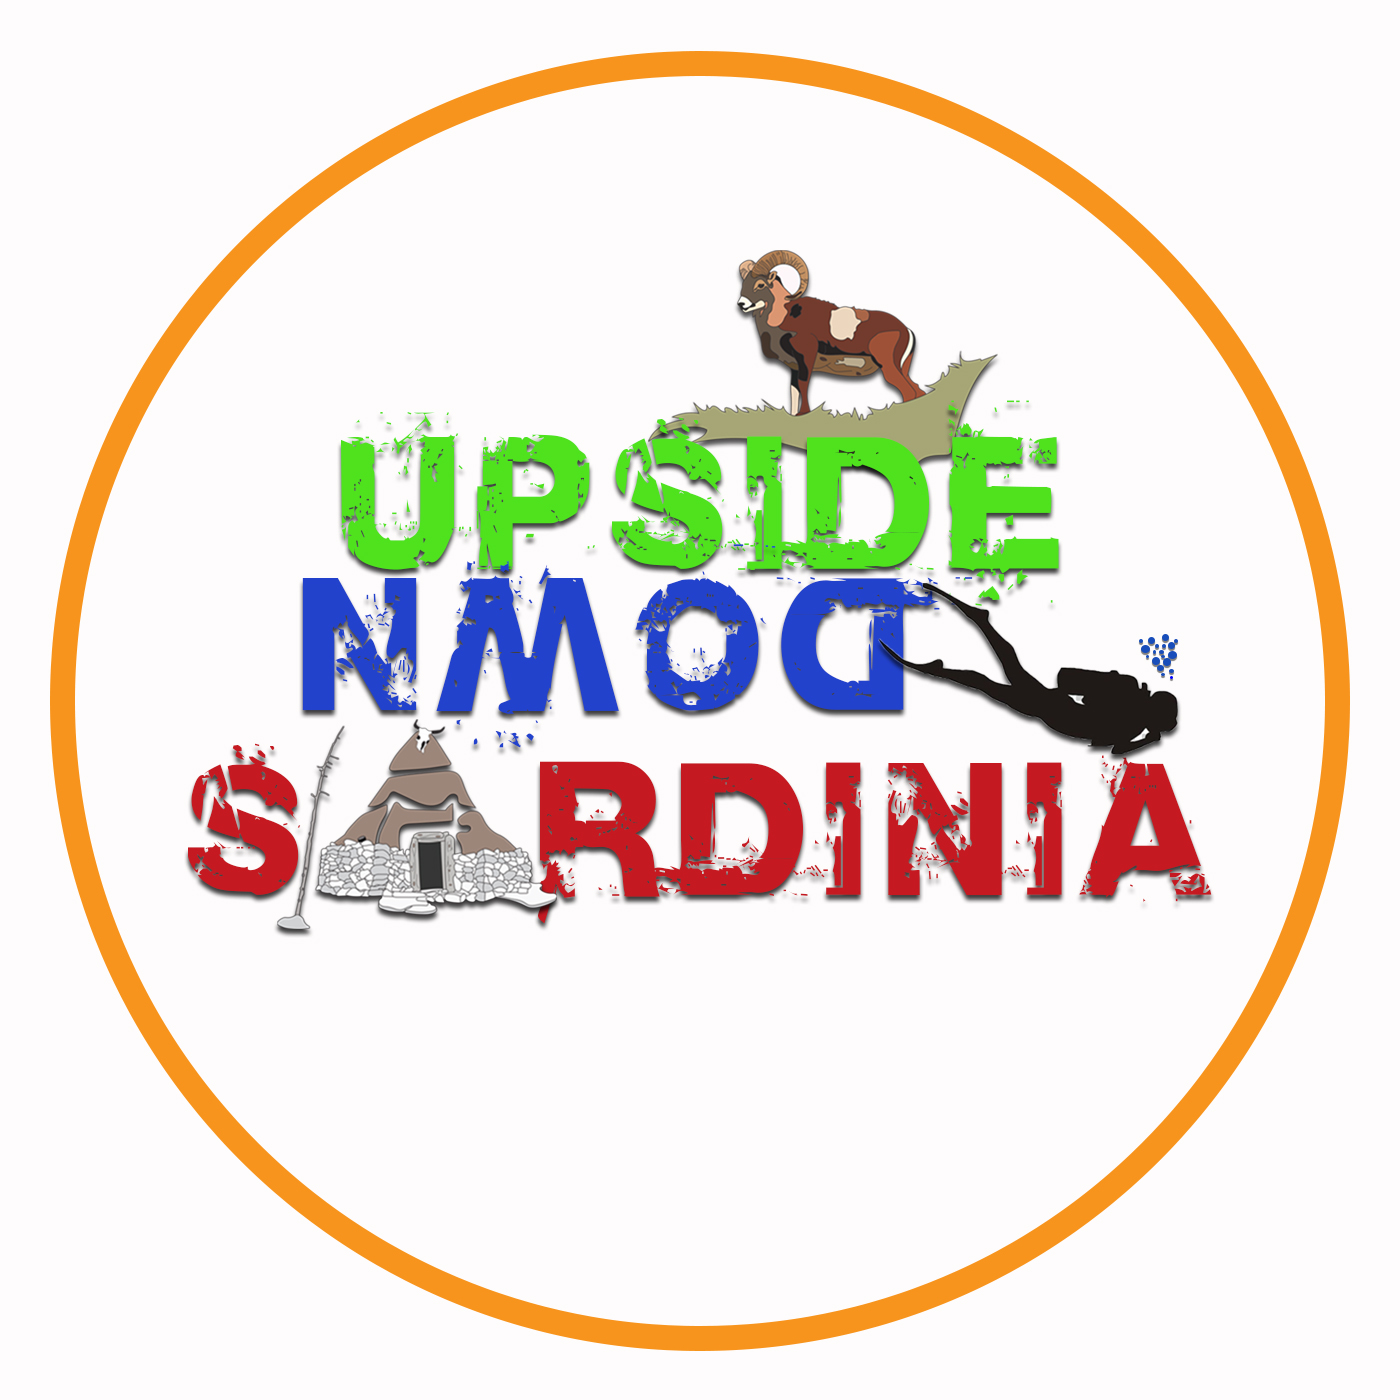 ichnusaorg_76upside-down-sardinia-logo.jpg